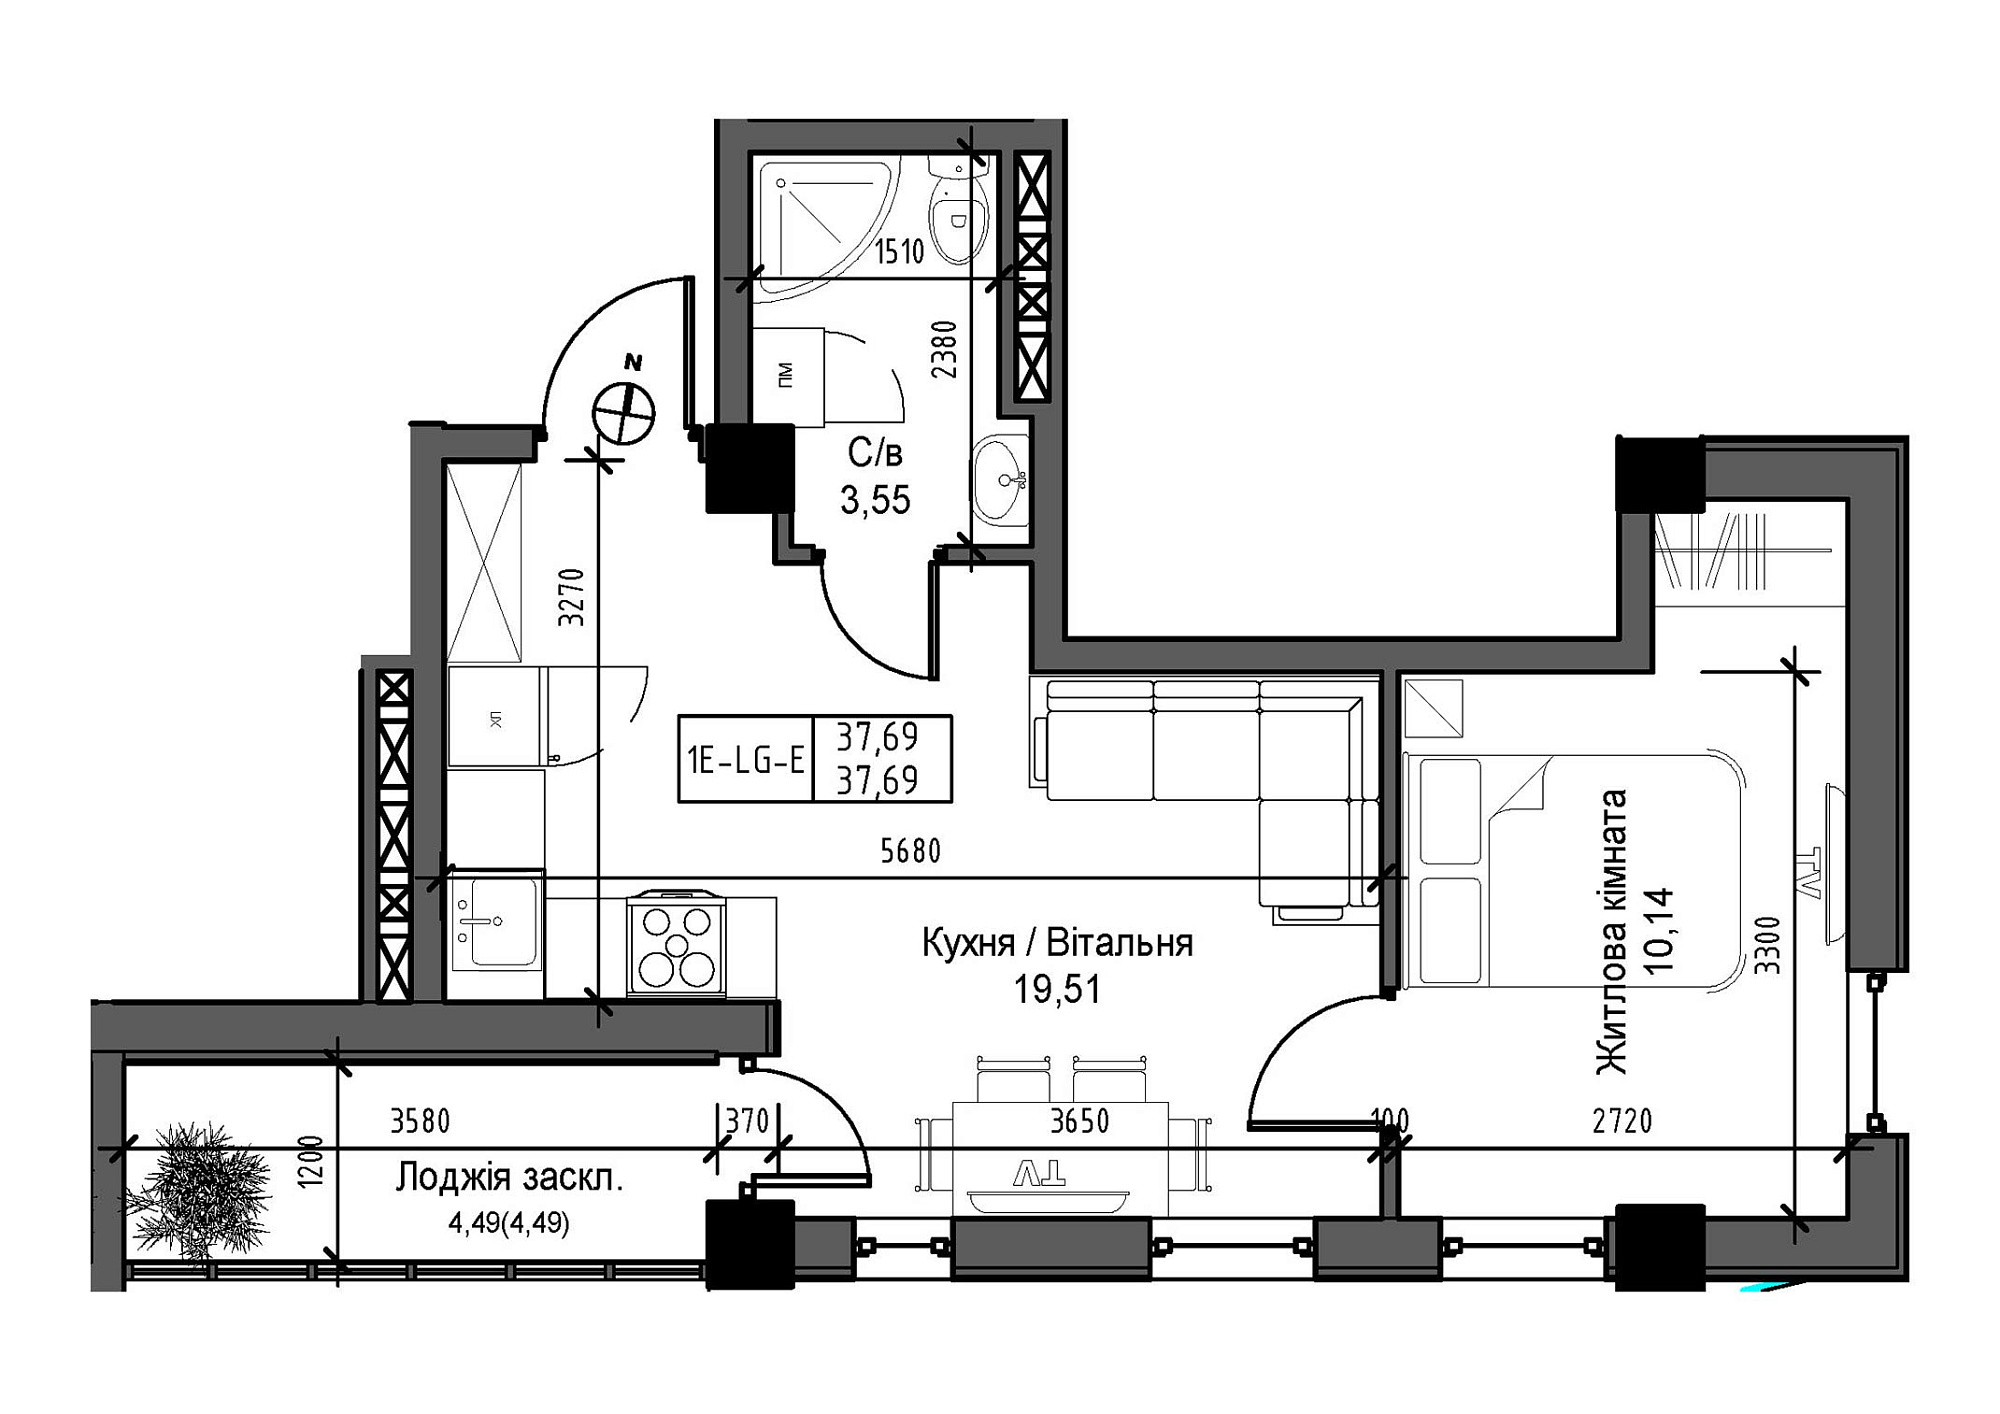 Planning 1-rm flats area 37.69m2, UM-007-03/0009.